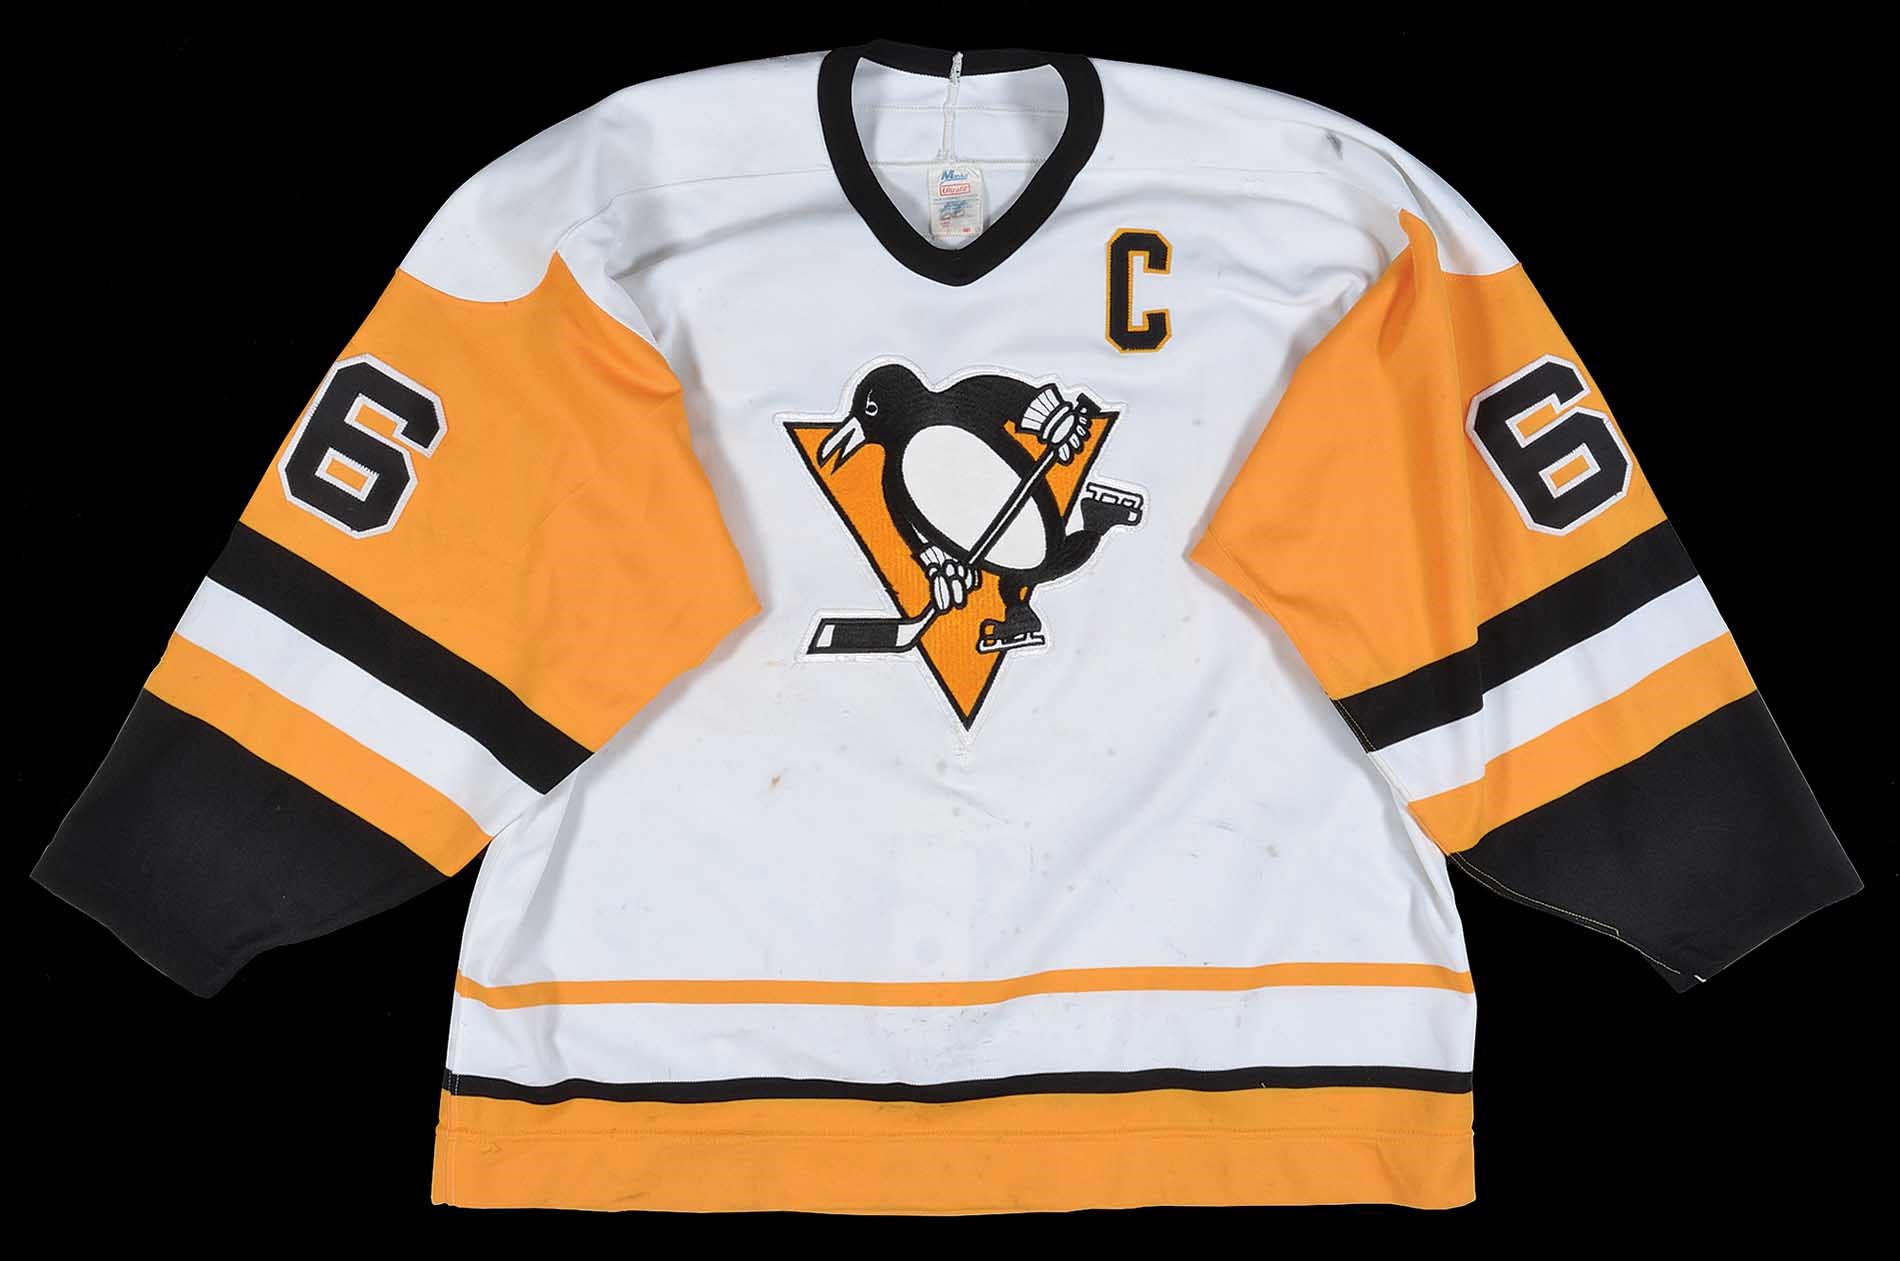 Джерси питтсбург пингвинз. Питтсбург Пингвинз джерси камуфляж. Pittsburgh Penguins одежда. Pittsburgh Penguins джерси на заказ.